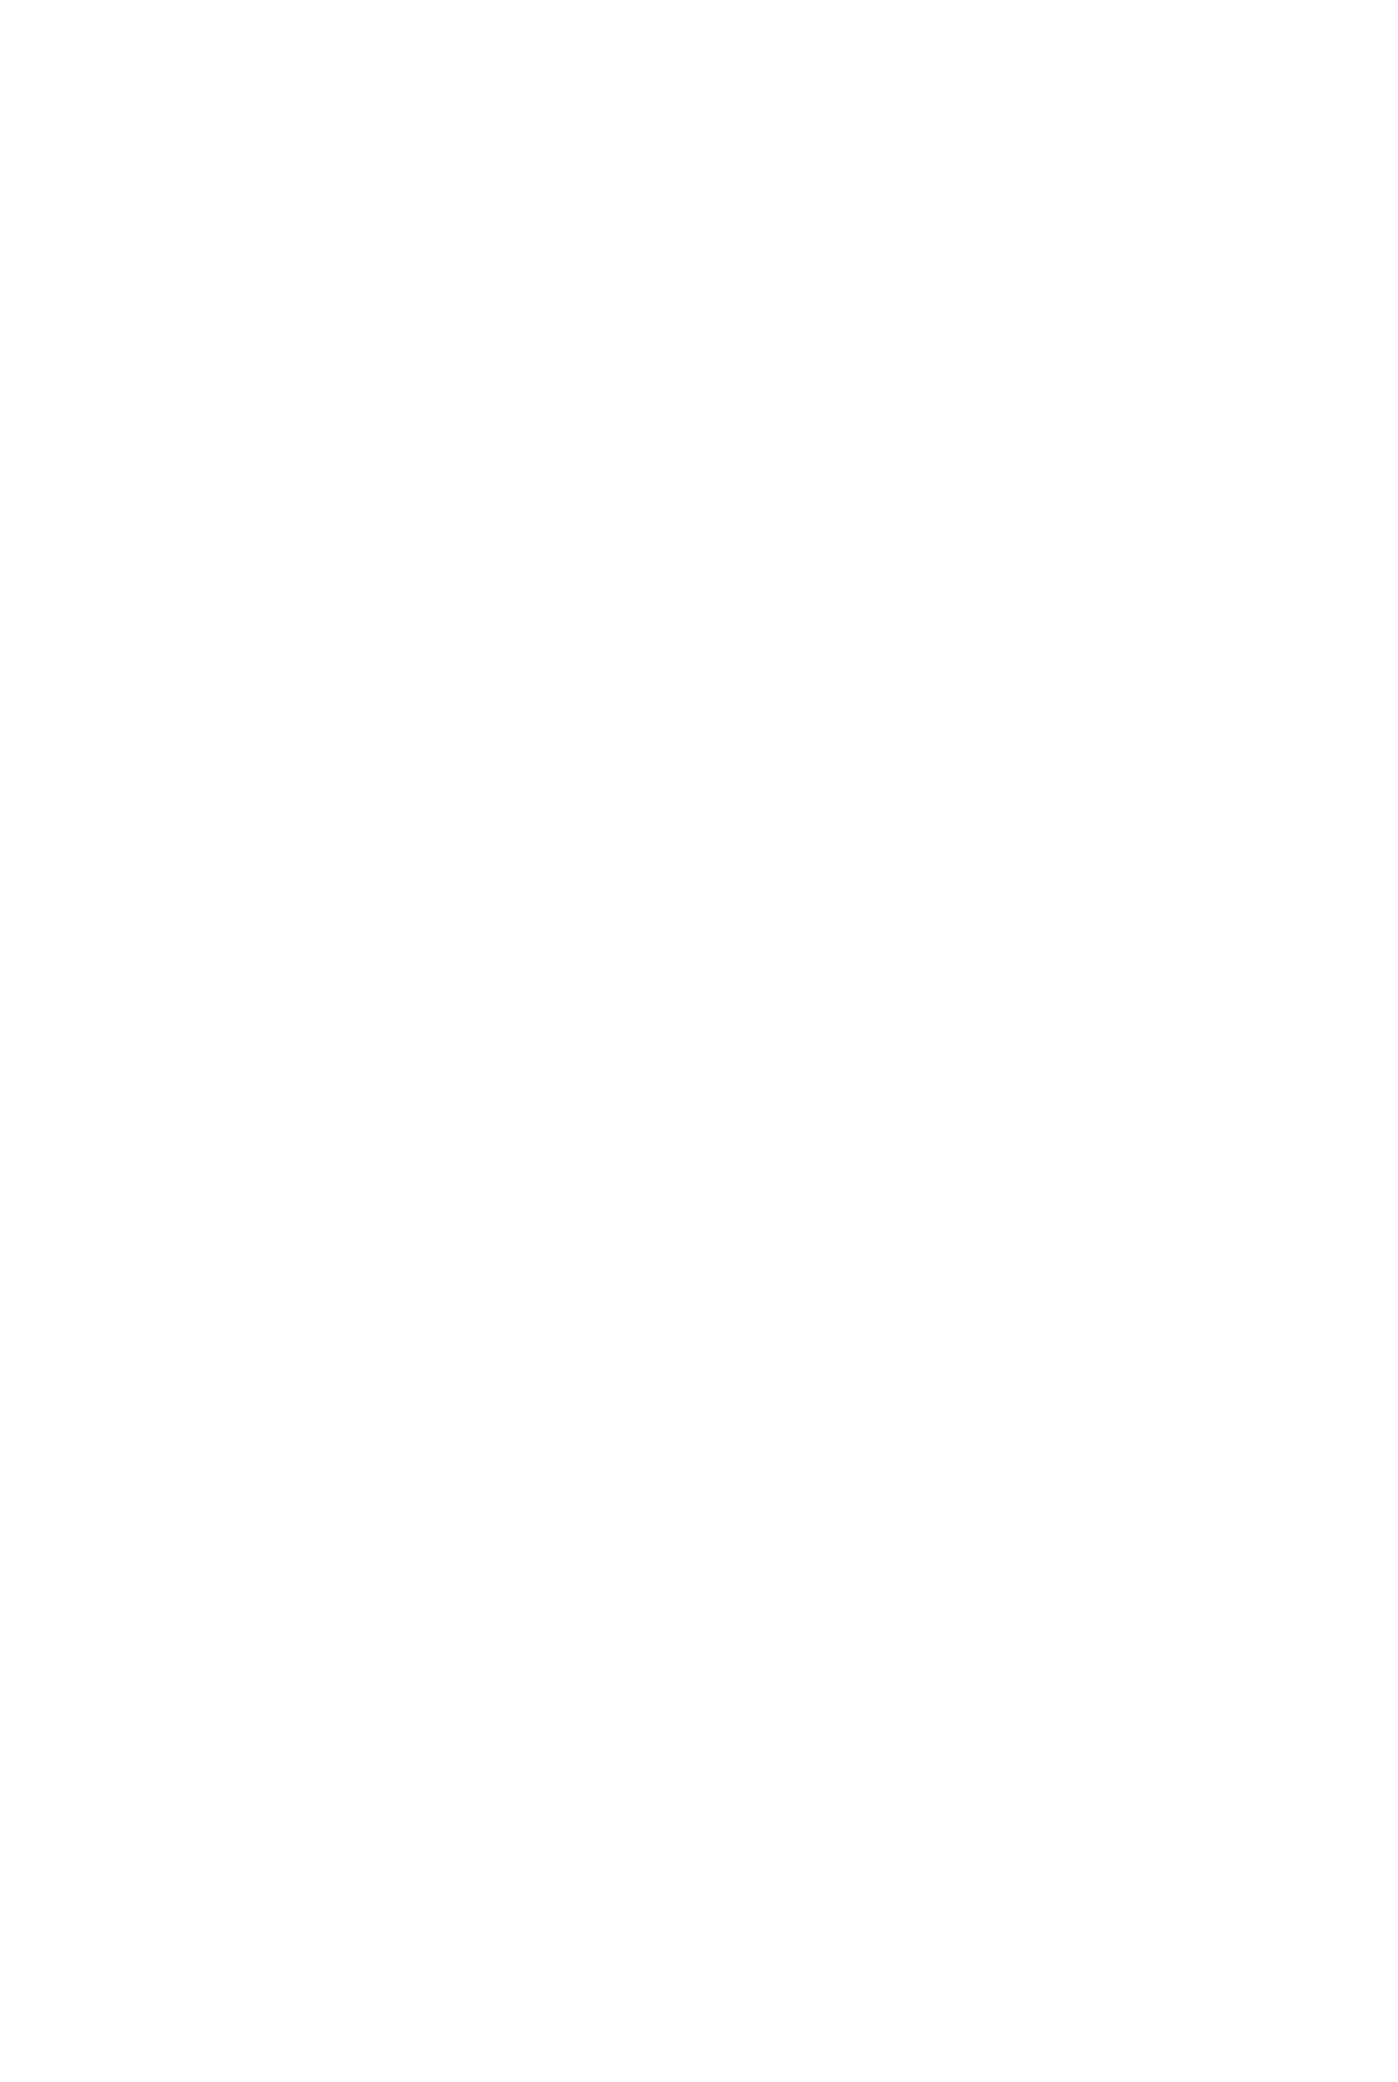 active fm logo